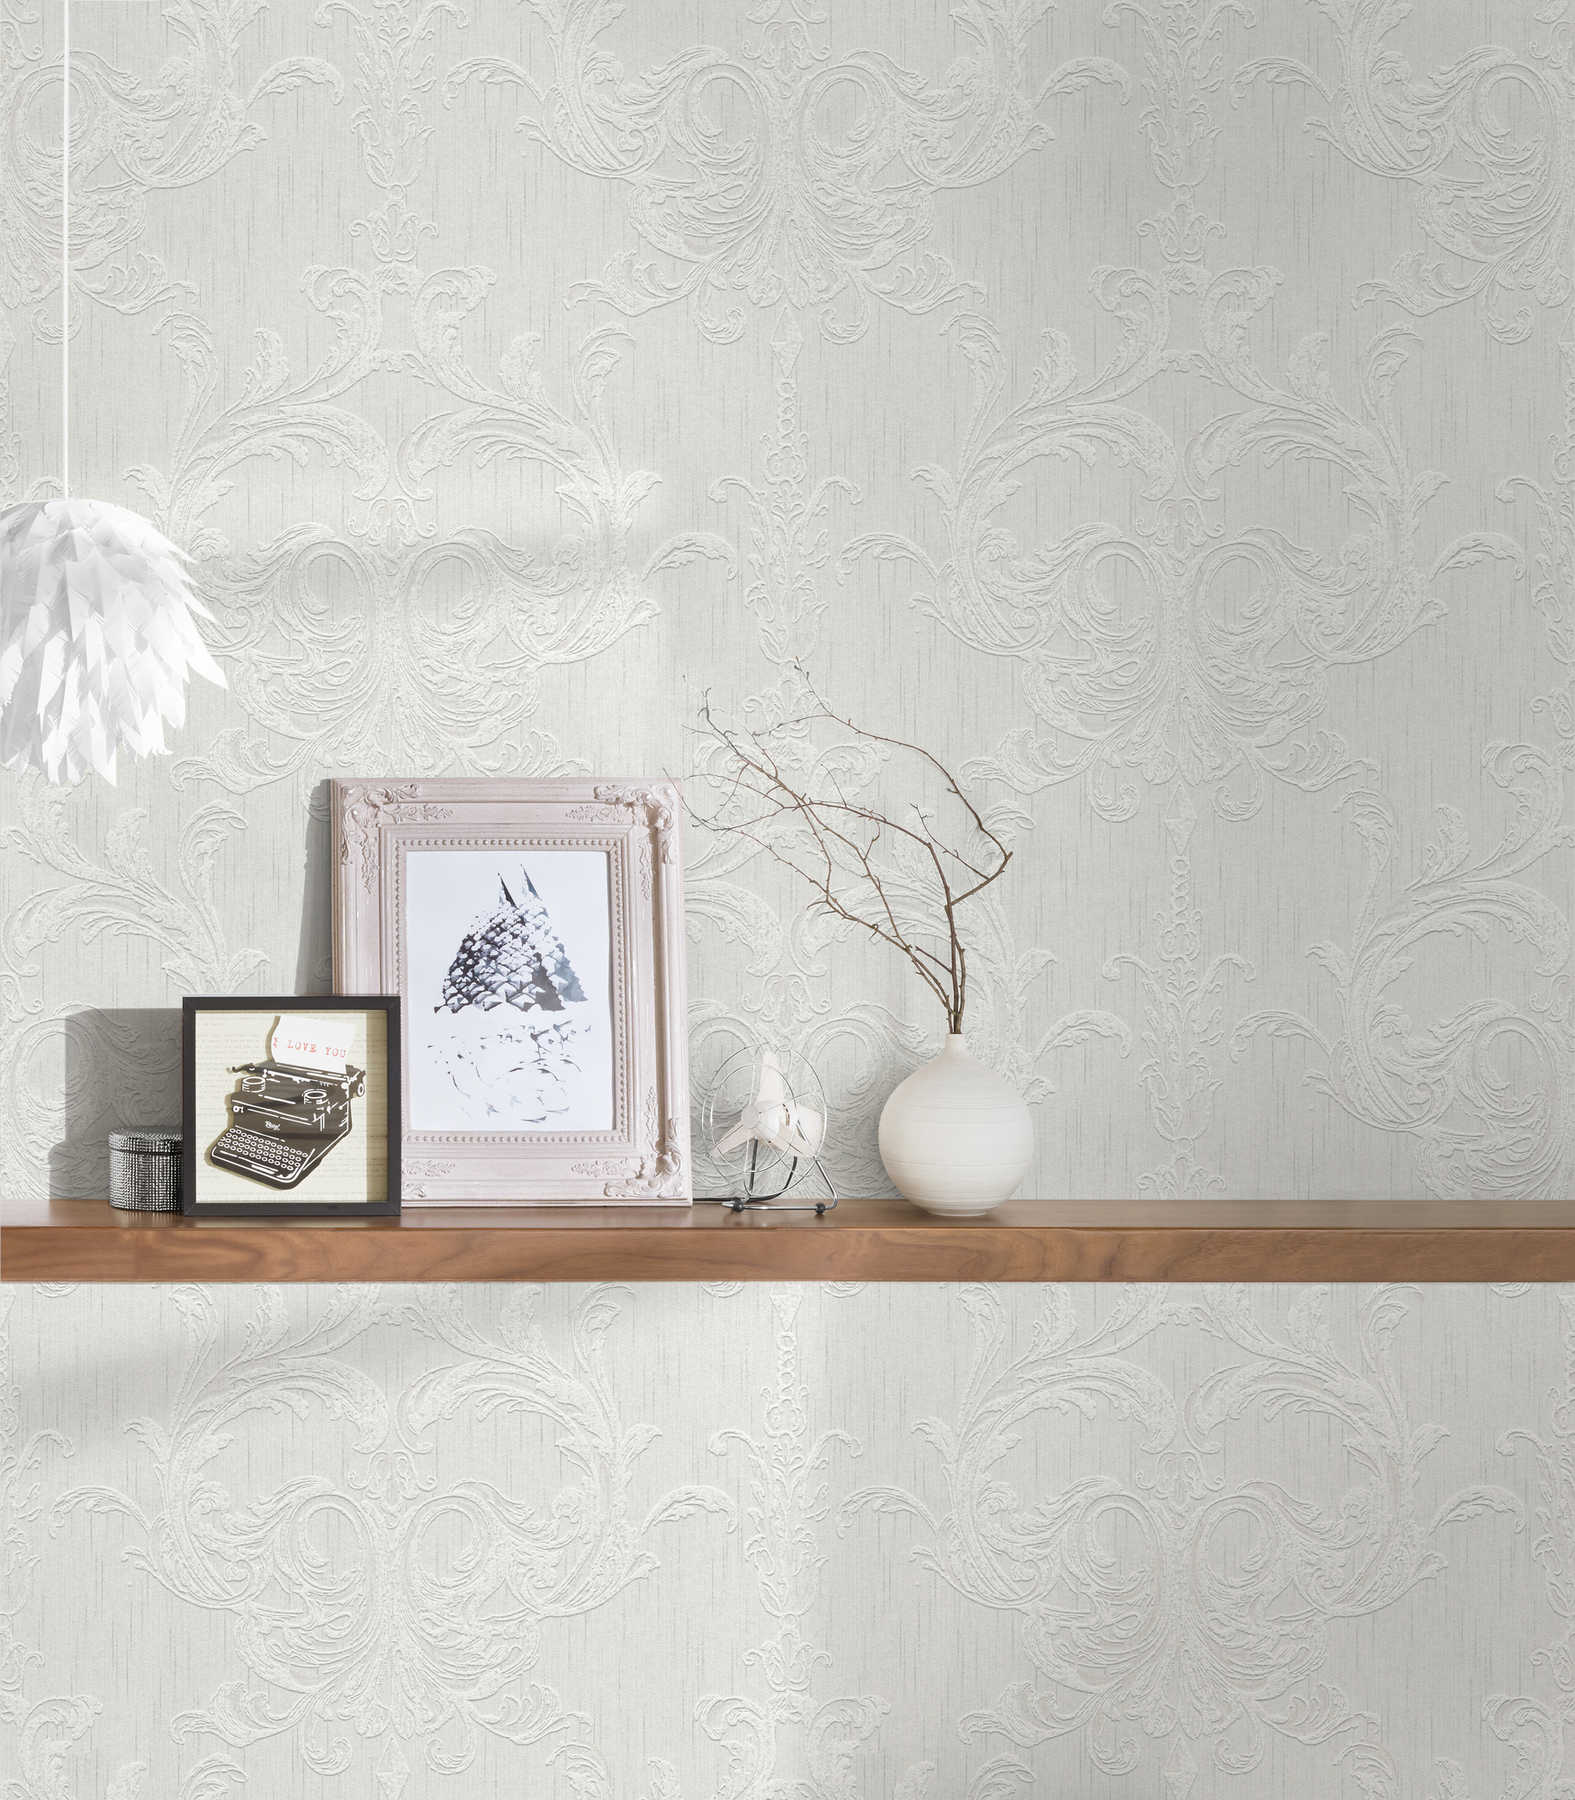             Ornamenttapete mit Stuck Design & Putzoptik – Grau, Weiß
        